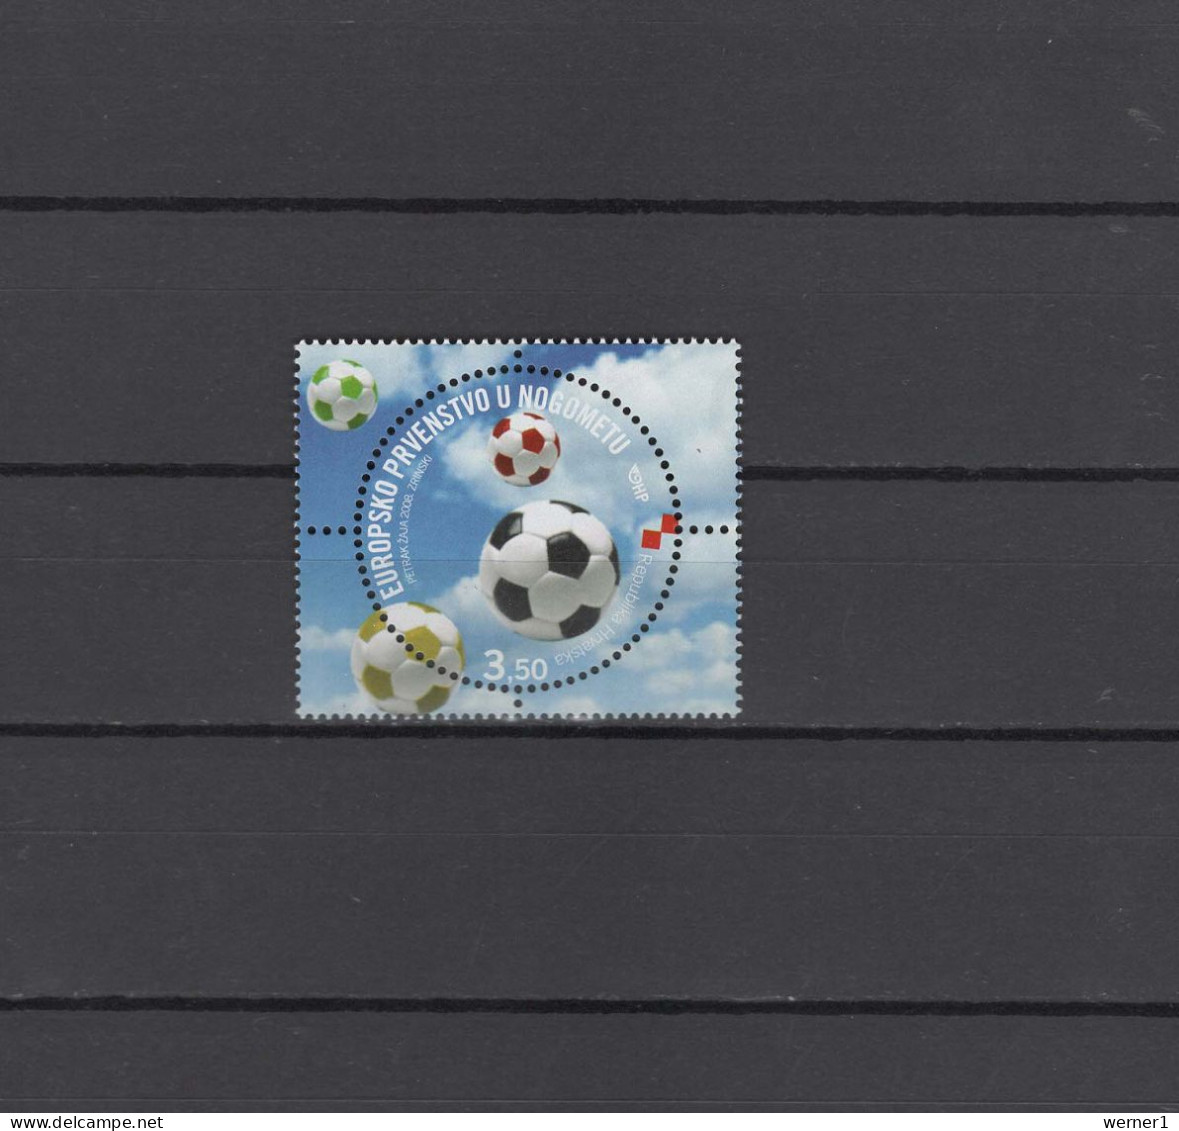 Croatia 2008 Football Soccer European Championship Stamp MNH - Championnat D'Europe (UEFA)